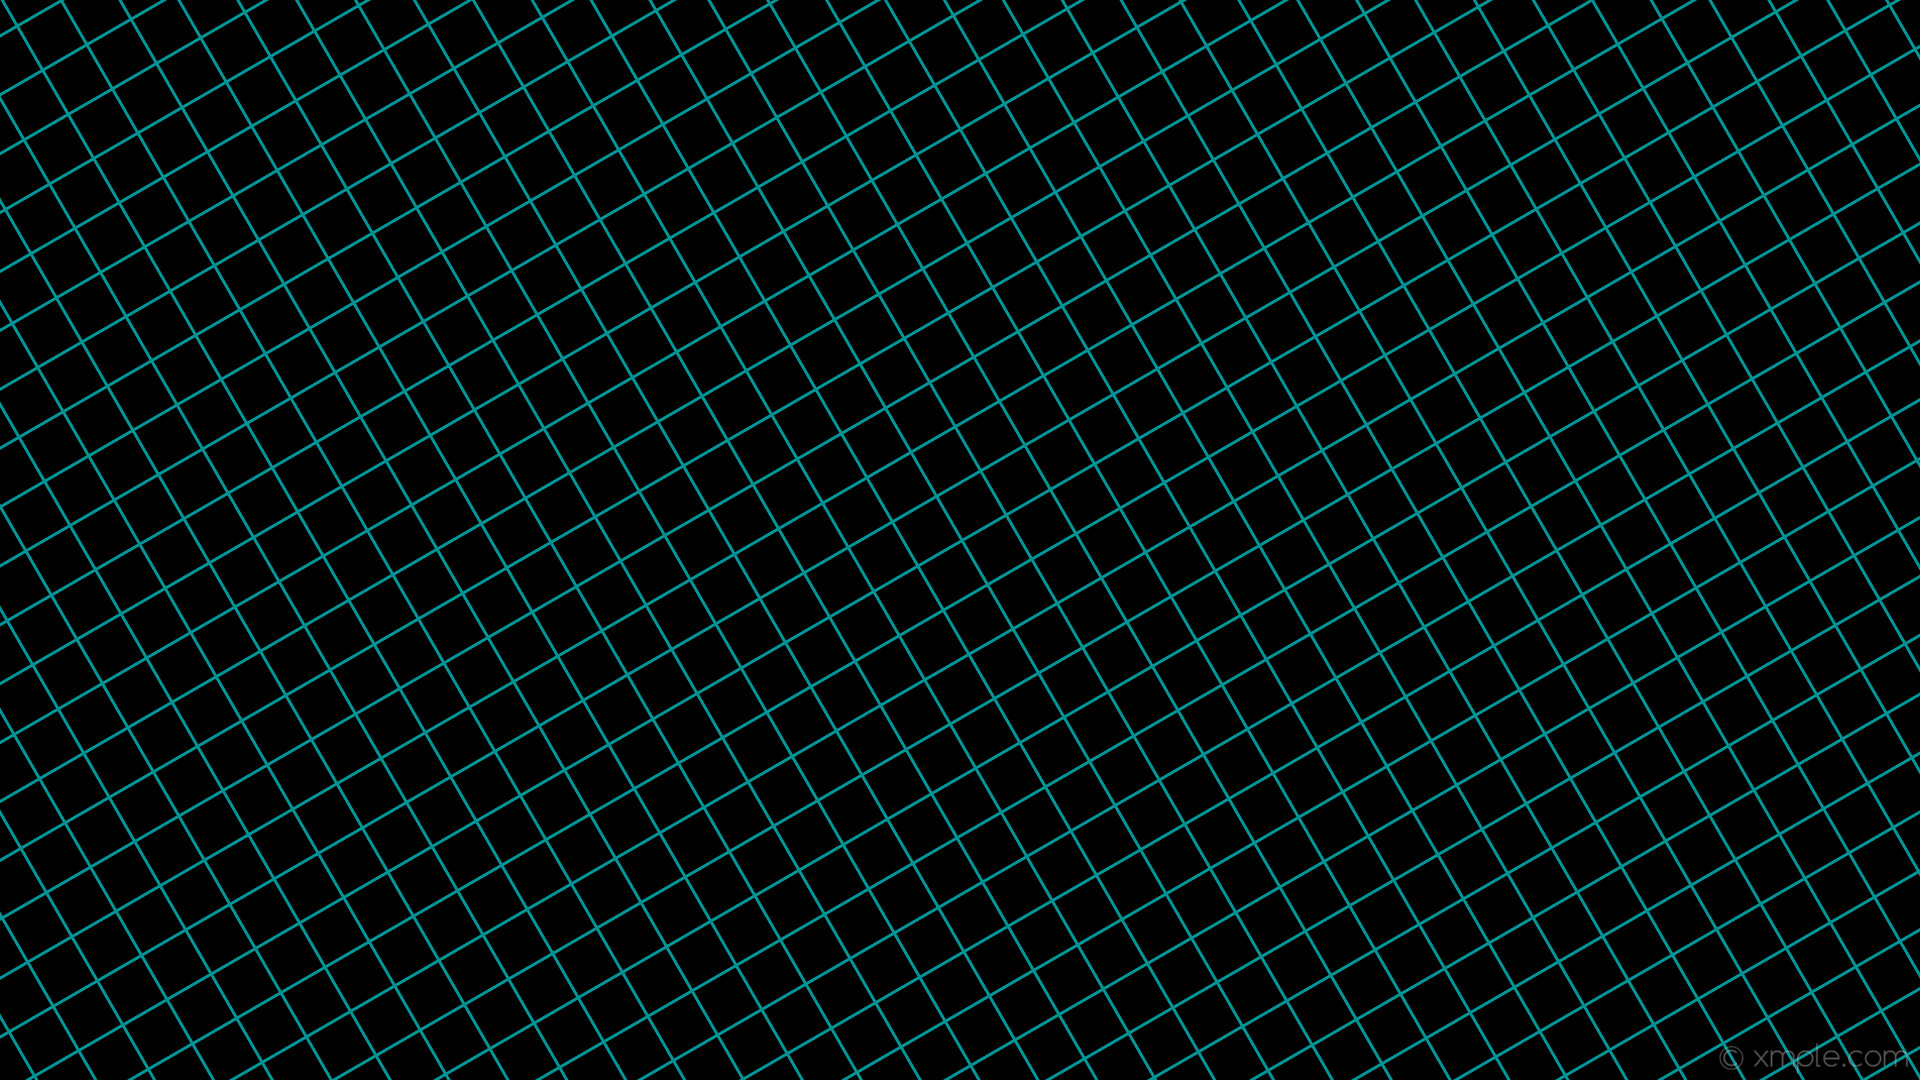 1920x1080 wallpaper graph paper blue black grid dark turquoise #000000 #00ced1 30Â°  3px 51px